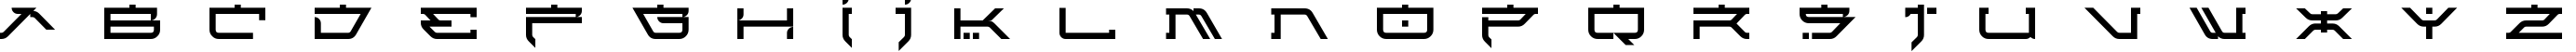 Пример написания английского алфавита шрифтом [.atari-kids.]